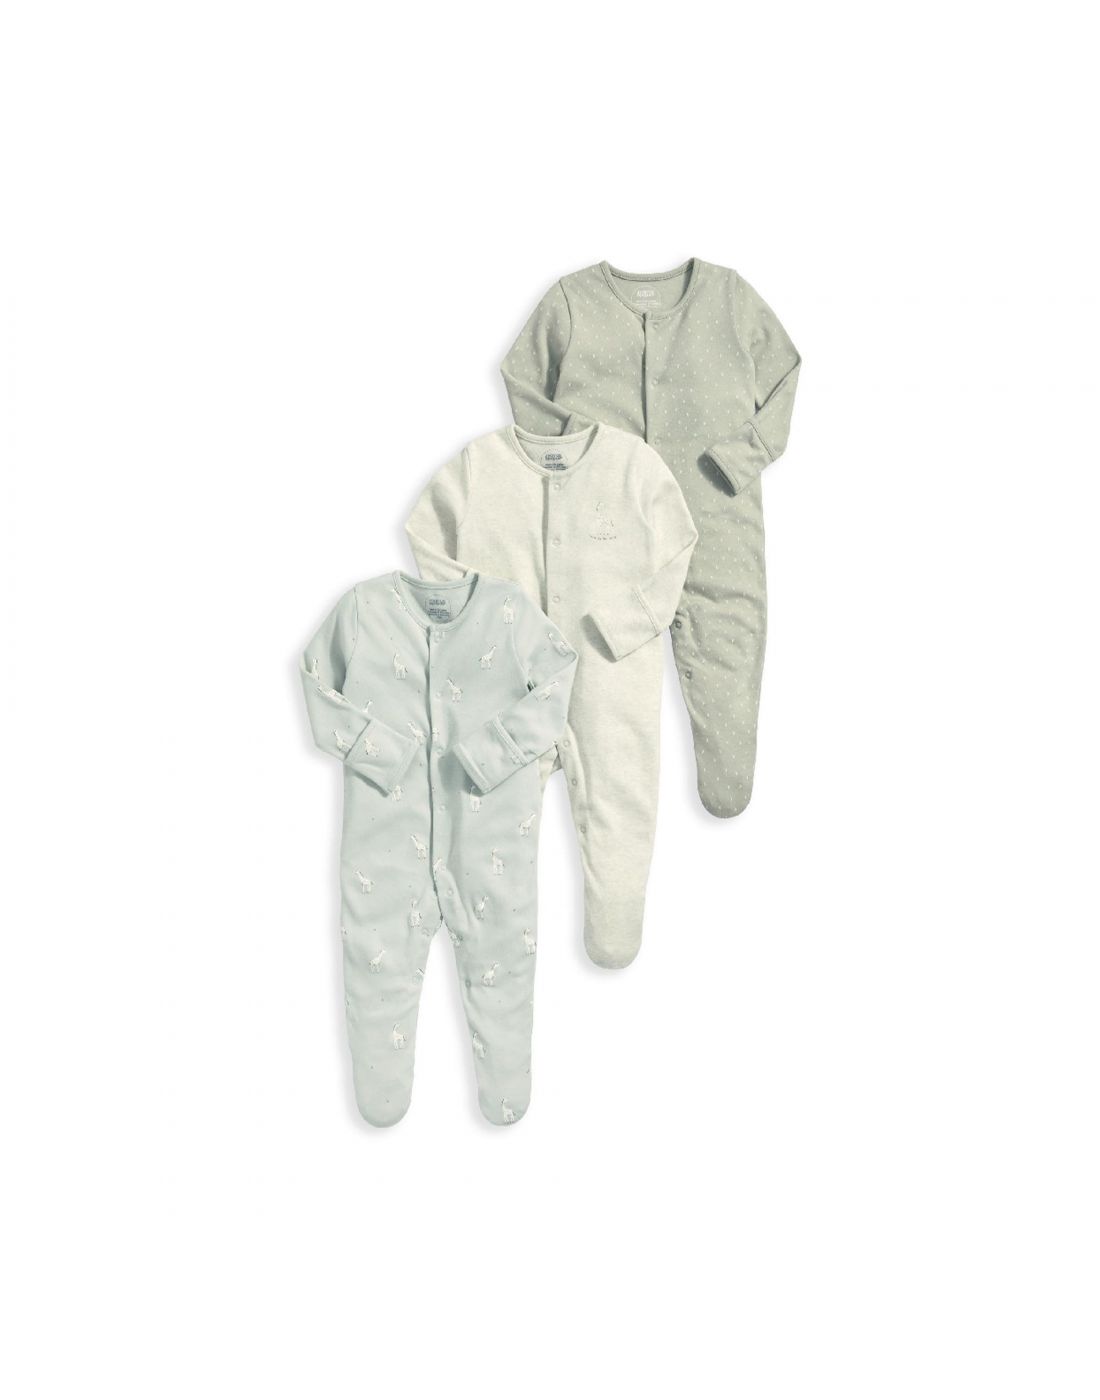 Mamas & Papas Giraffe Cotton Sleepsuits 3 Pack